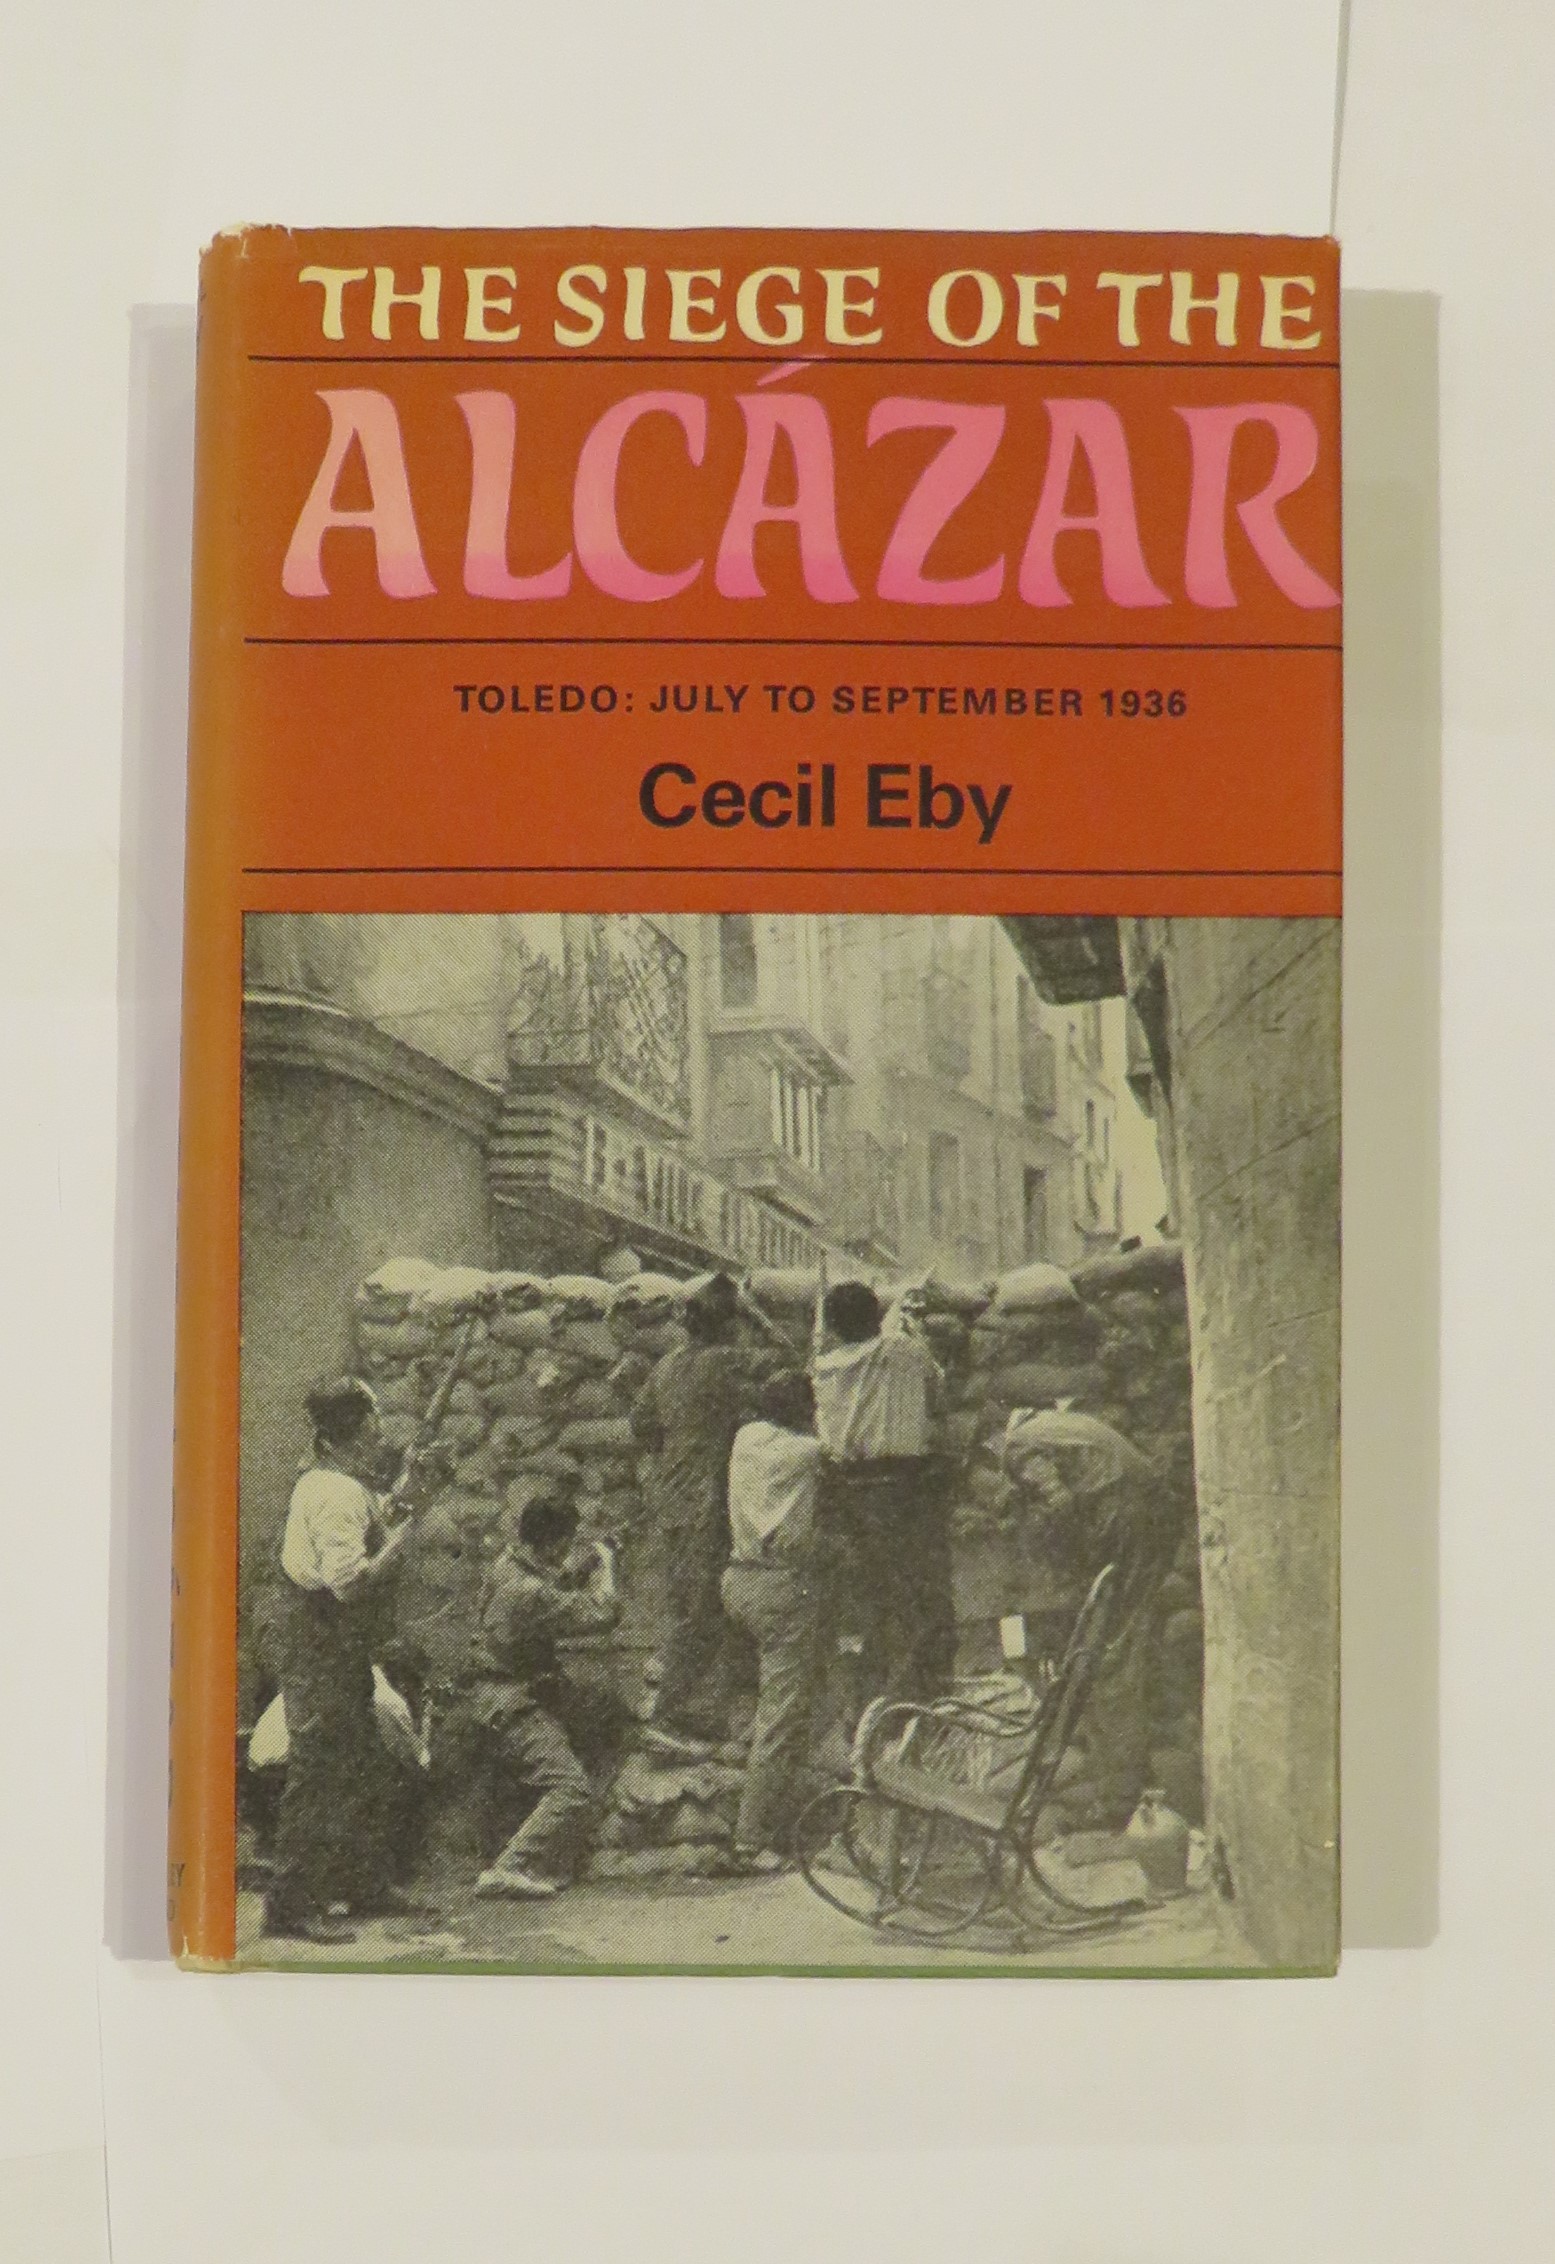 The Siege of Alcazar